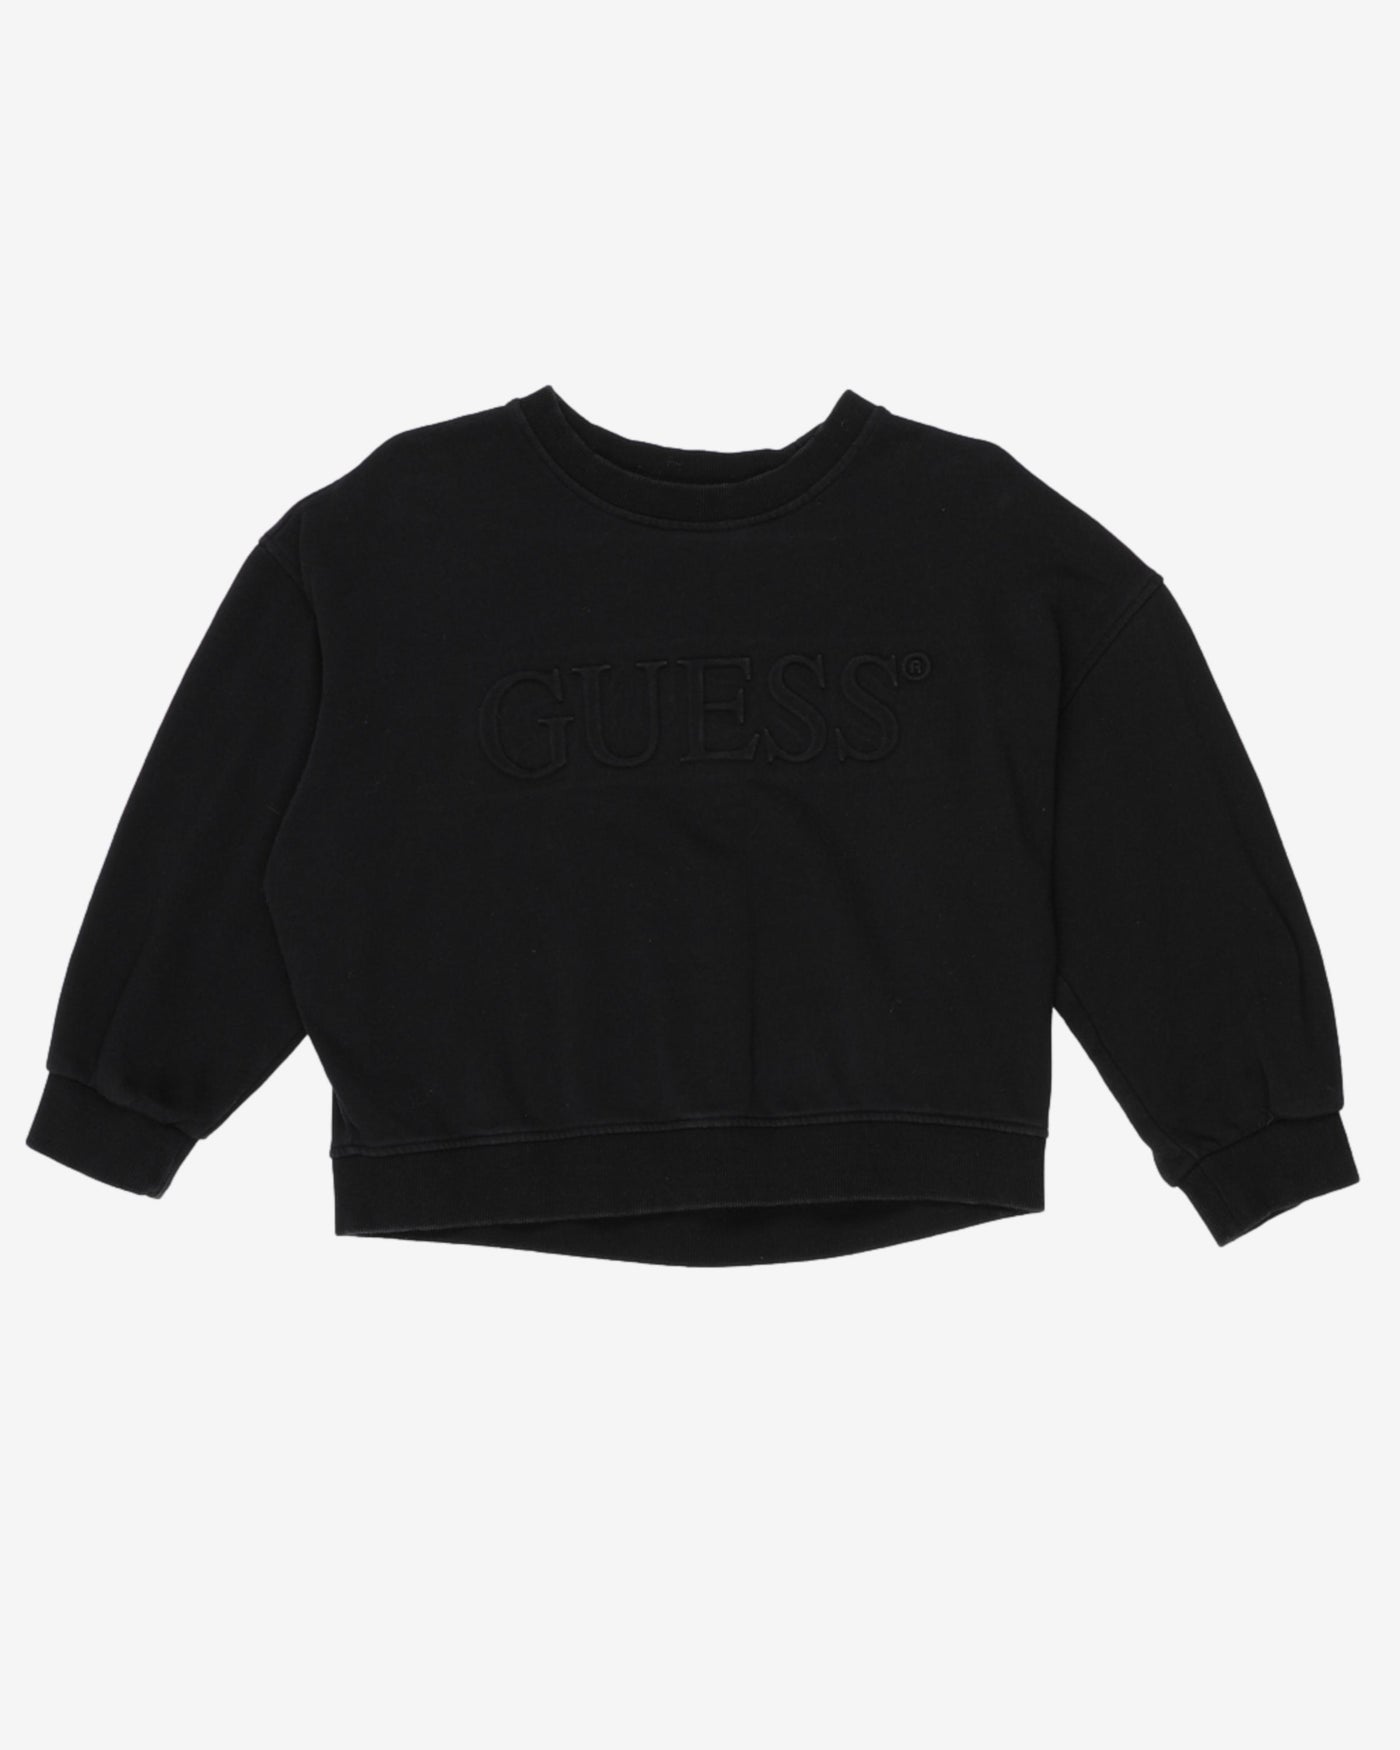 Guess Cropped Fit Black Puff Textured Crewneck / Sweatshirt - L